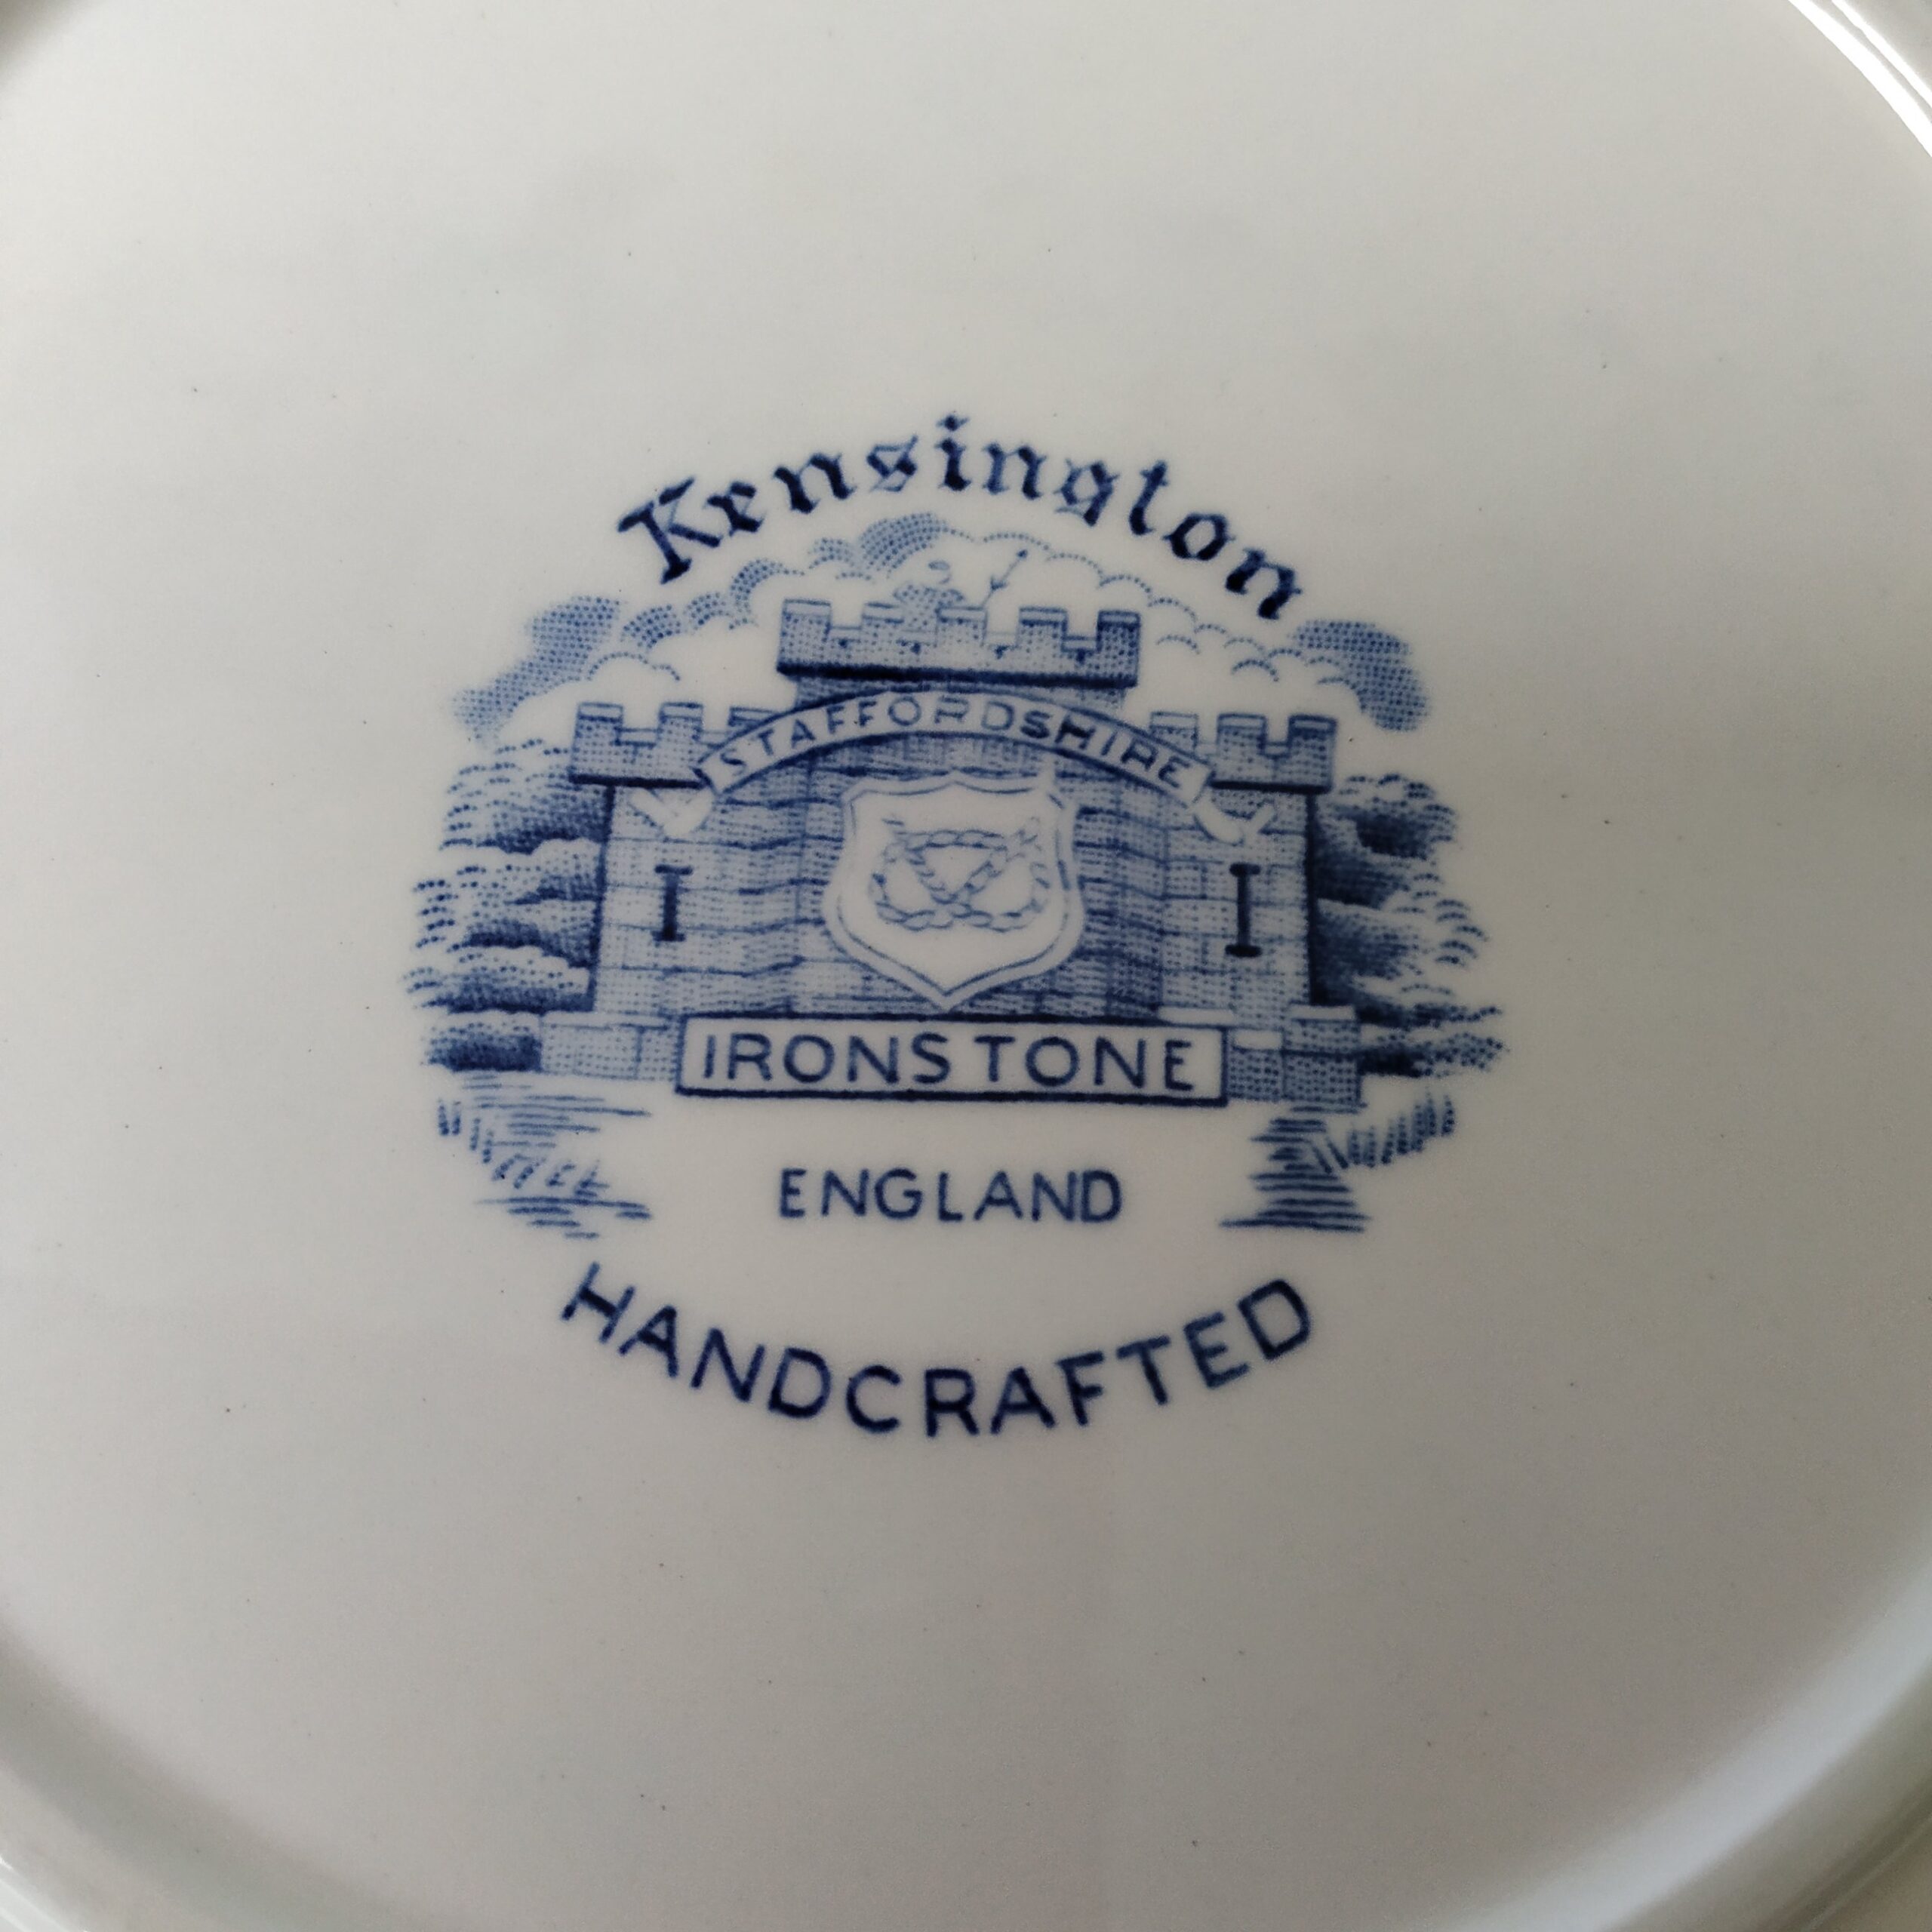 Gebakstel Kensington Ironstone Engeland – handcrafted – 1 bord + 7 bordjes – diameter 25,5 en 15,5 cm (3)